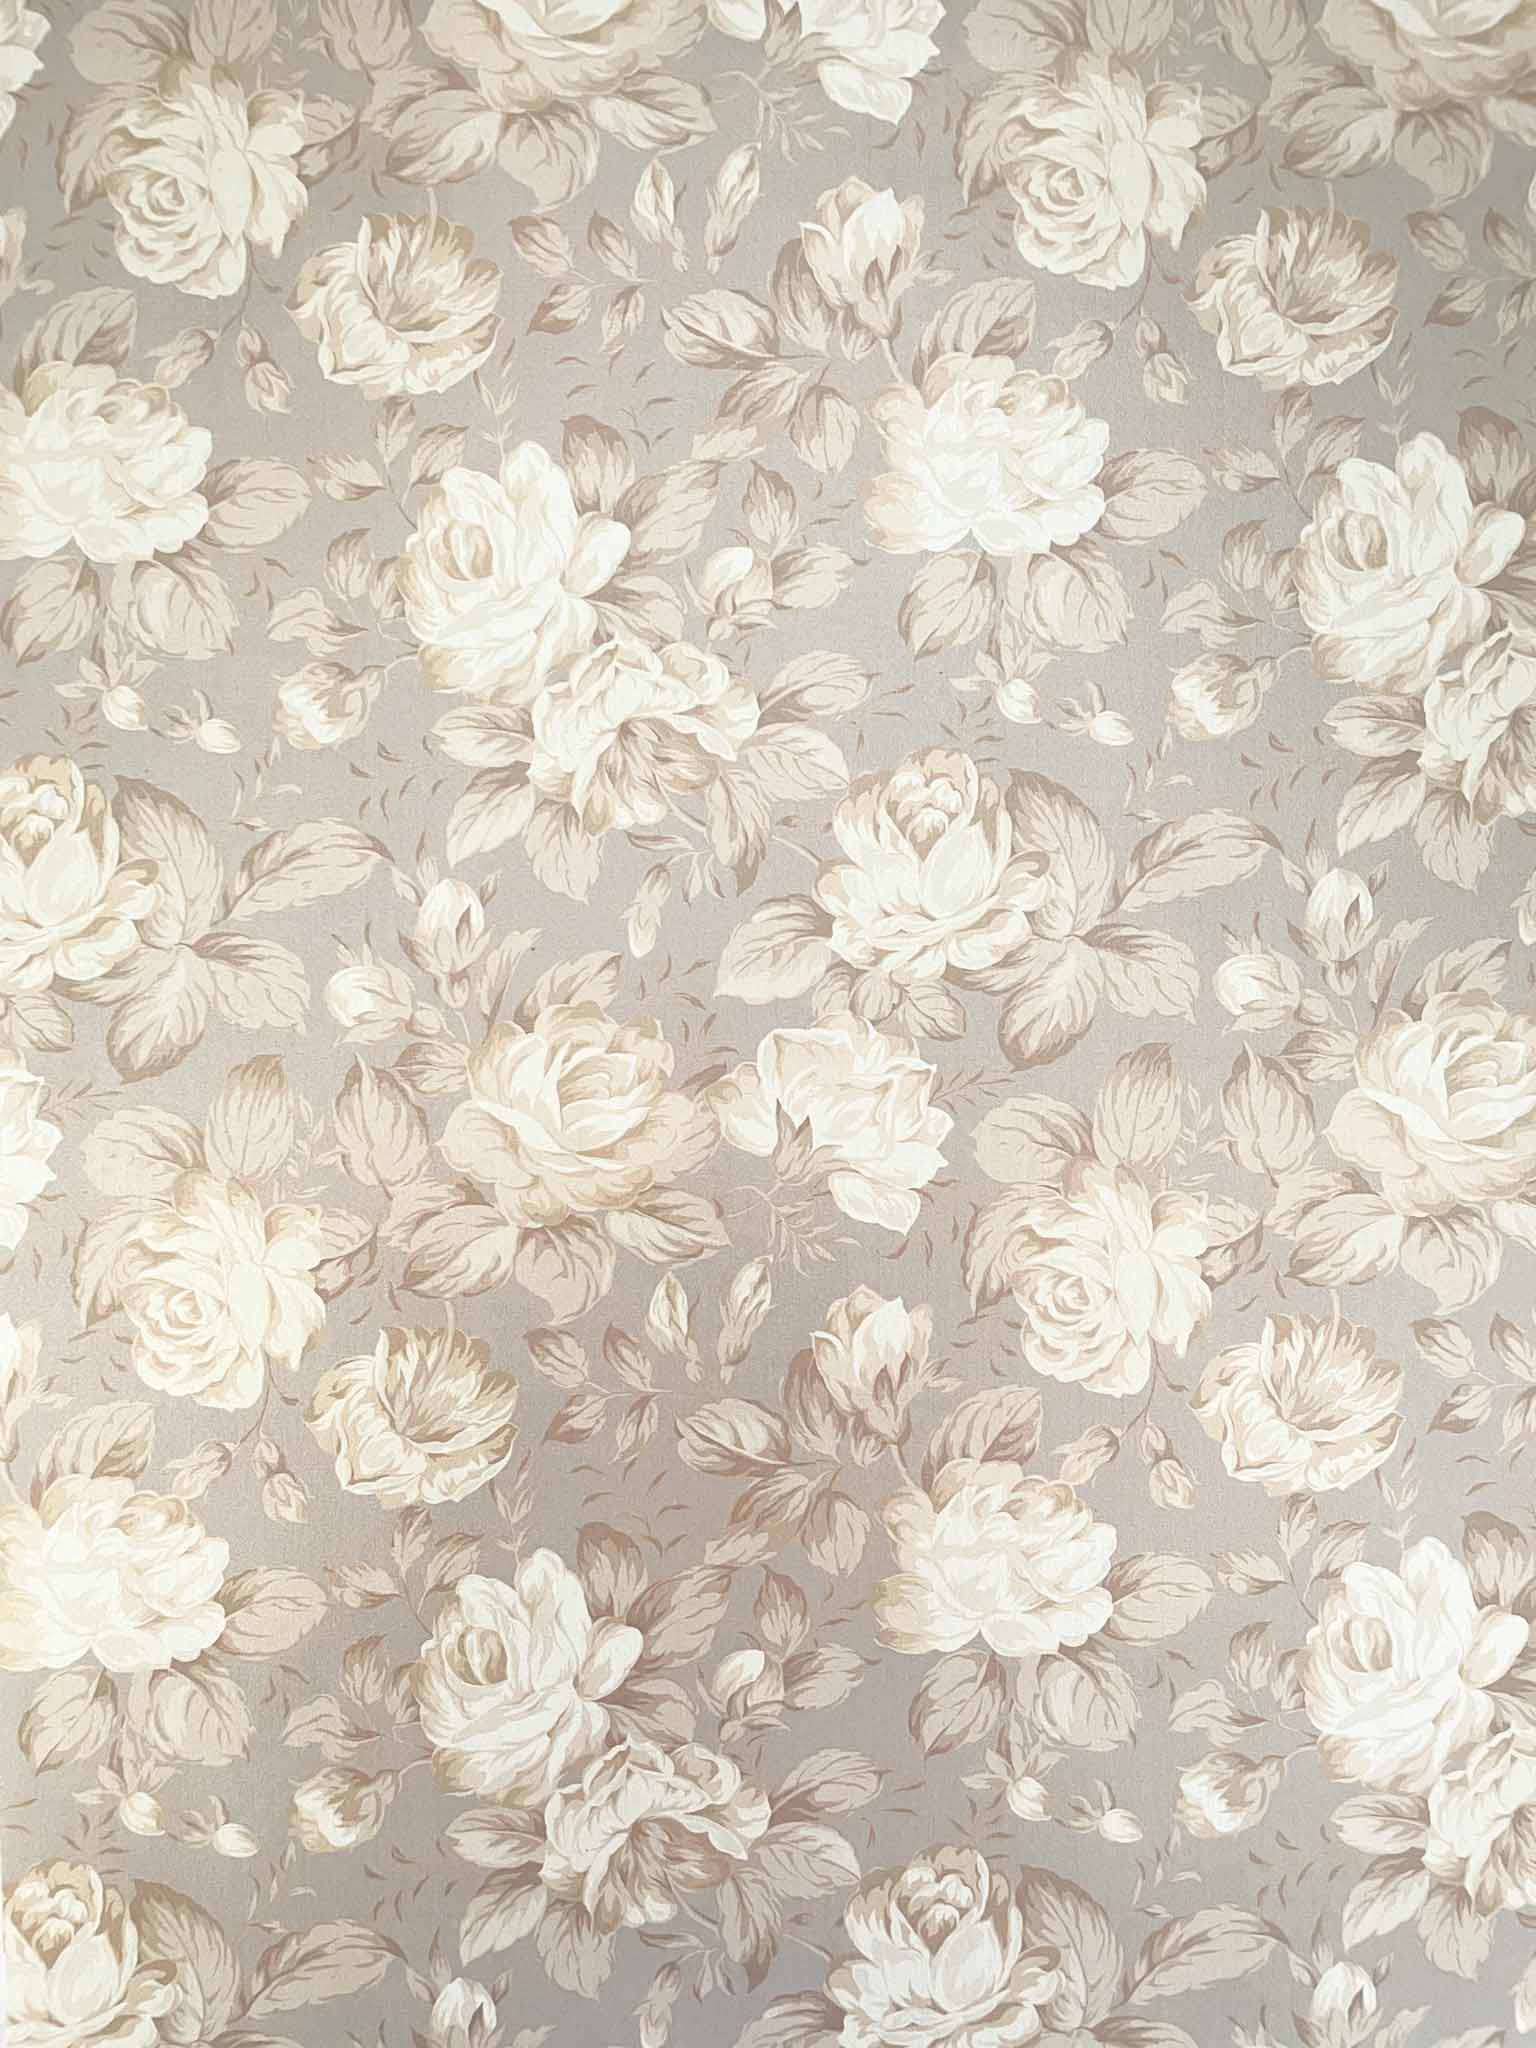 woburn-vintage-floral-pattern-paper